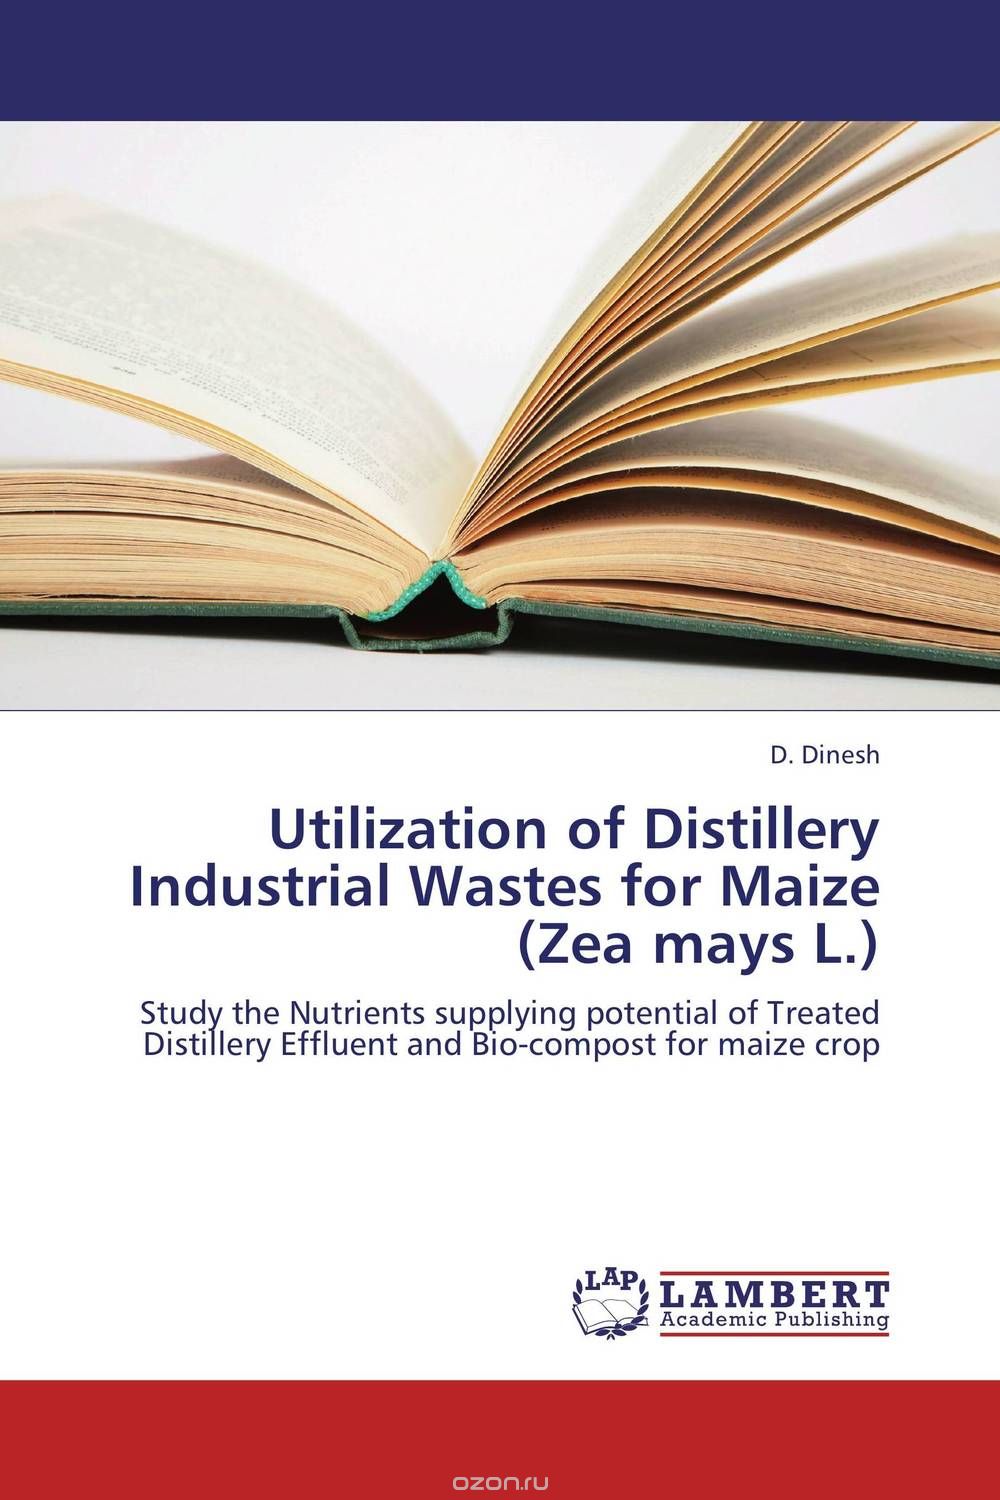 Скачать книгу "Utilization of Distillery Industrial Wastes for Maize (Zea mays L.)"